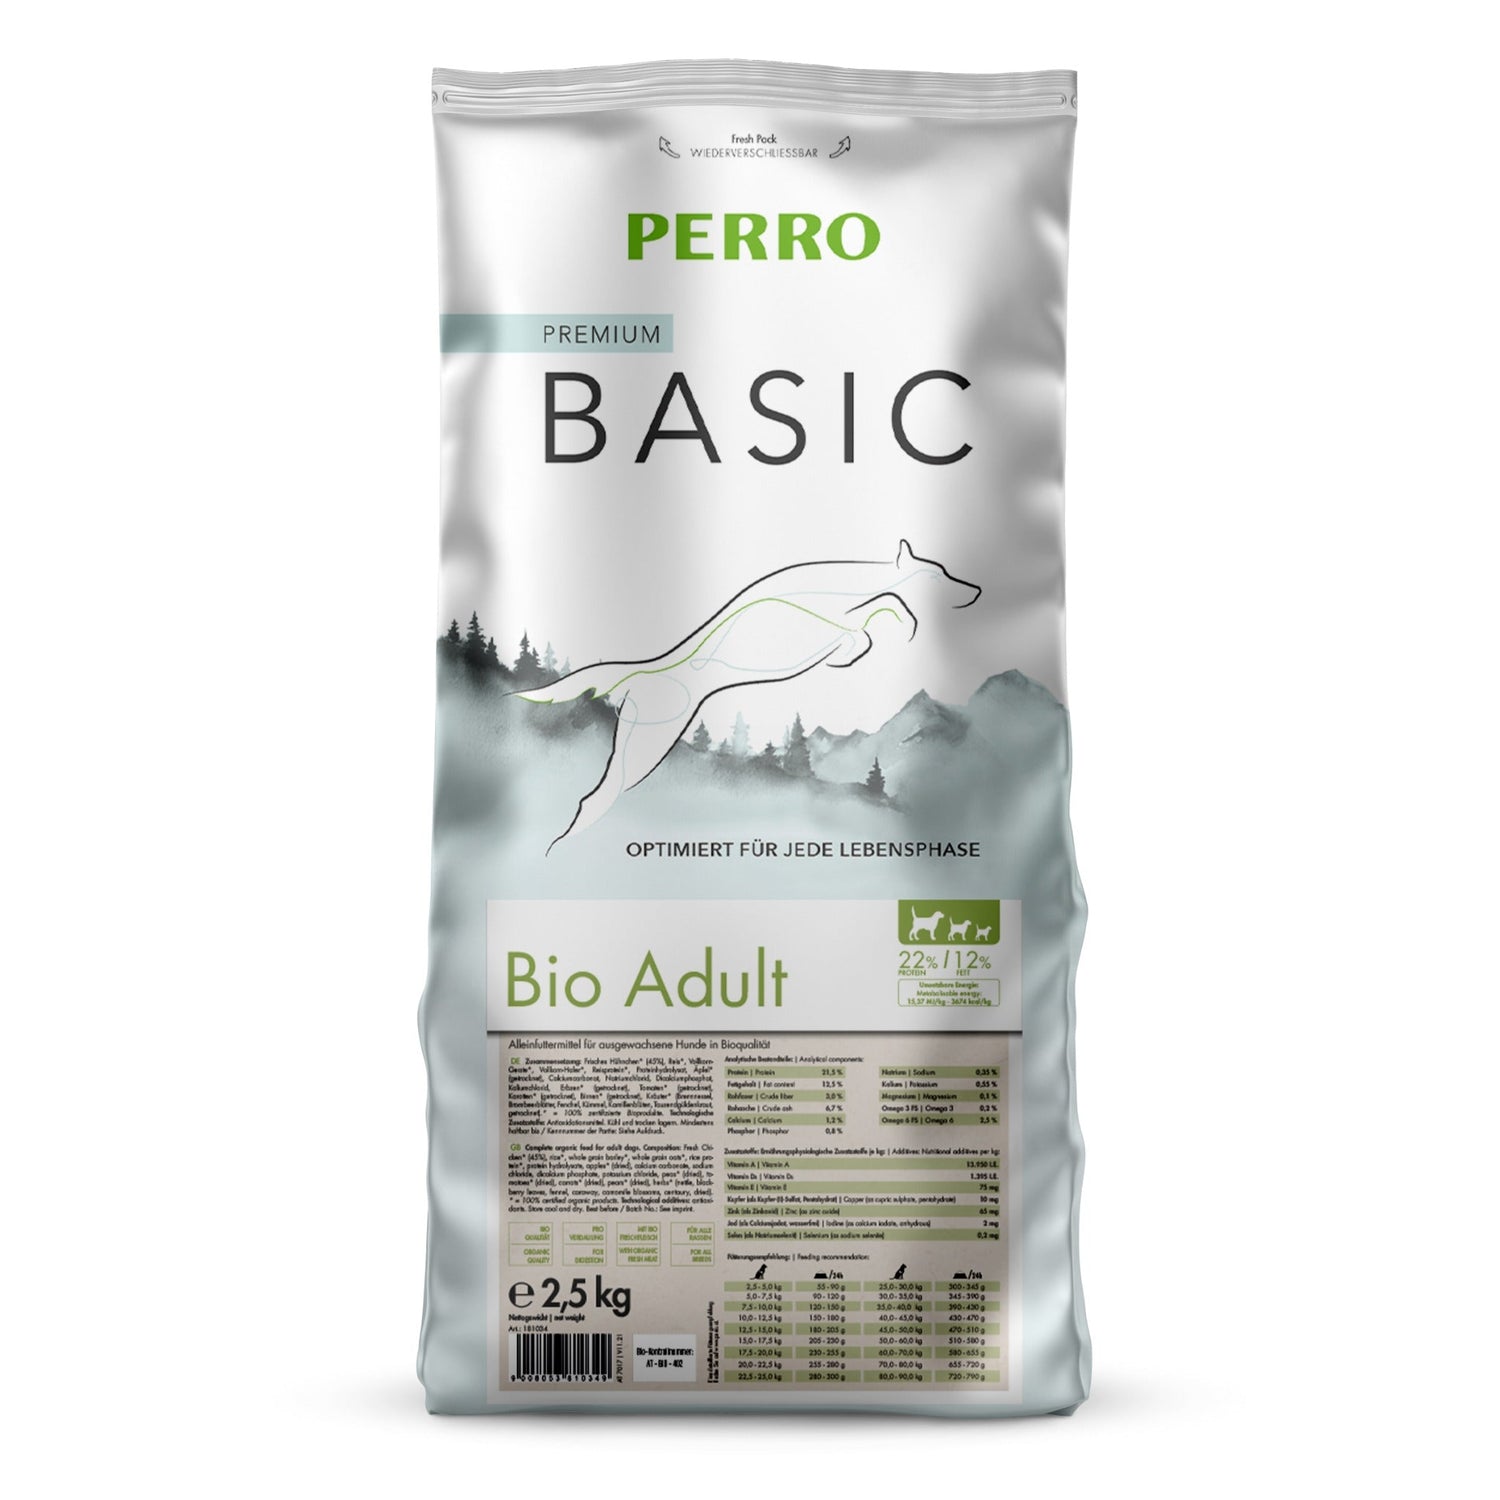 Perro Basic Bio Adult - Hunde Trockenfutter - Woofshack